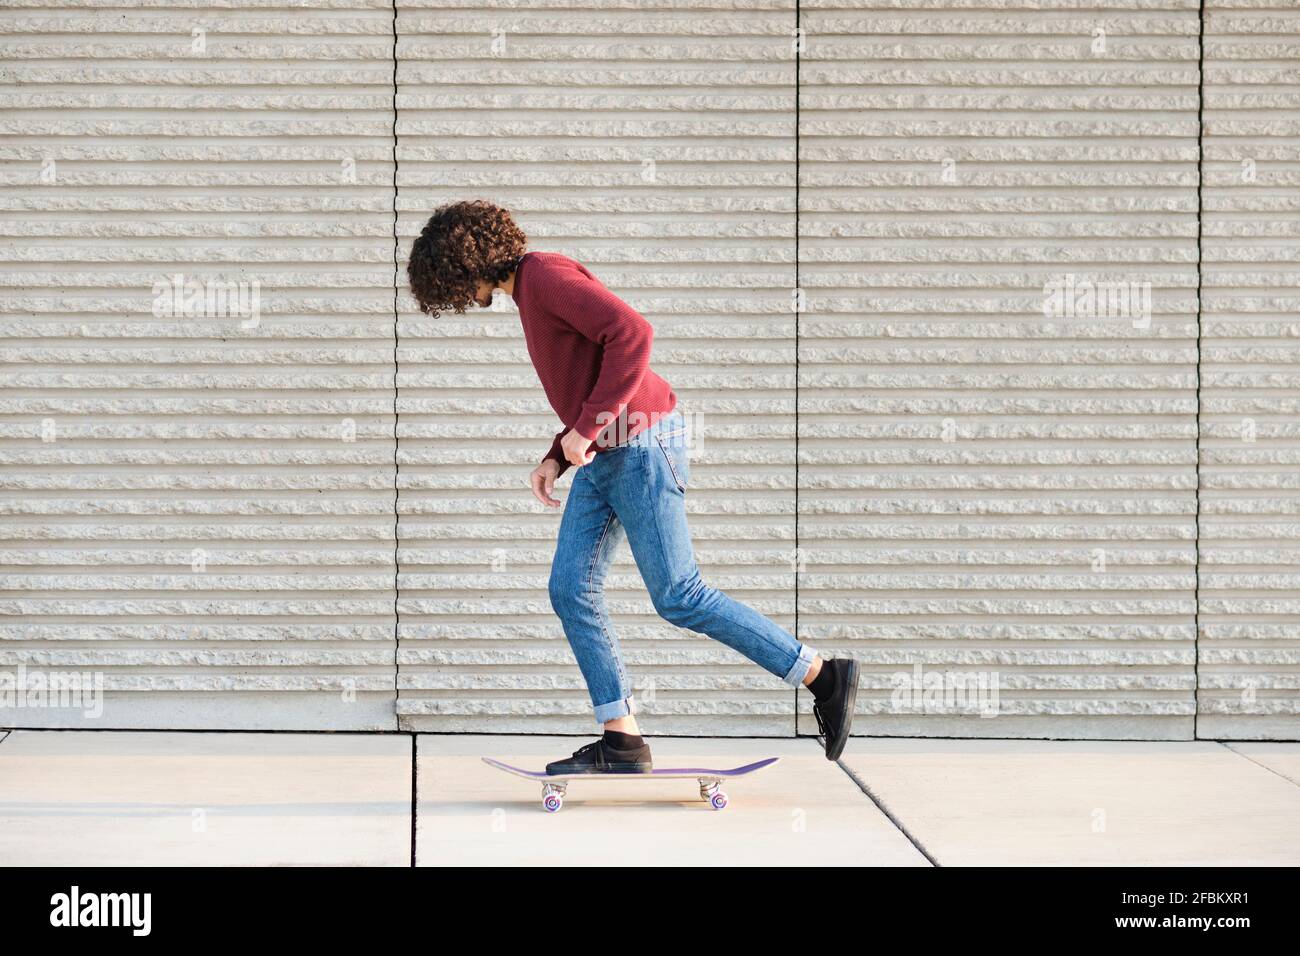 Curly haired man Skateboarding an der Wand Stockfoto